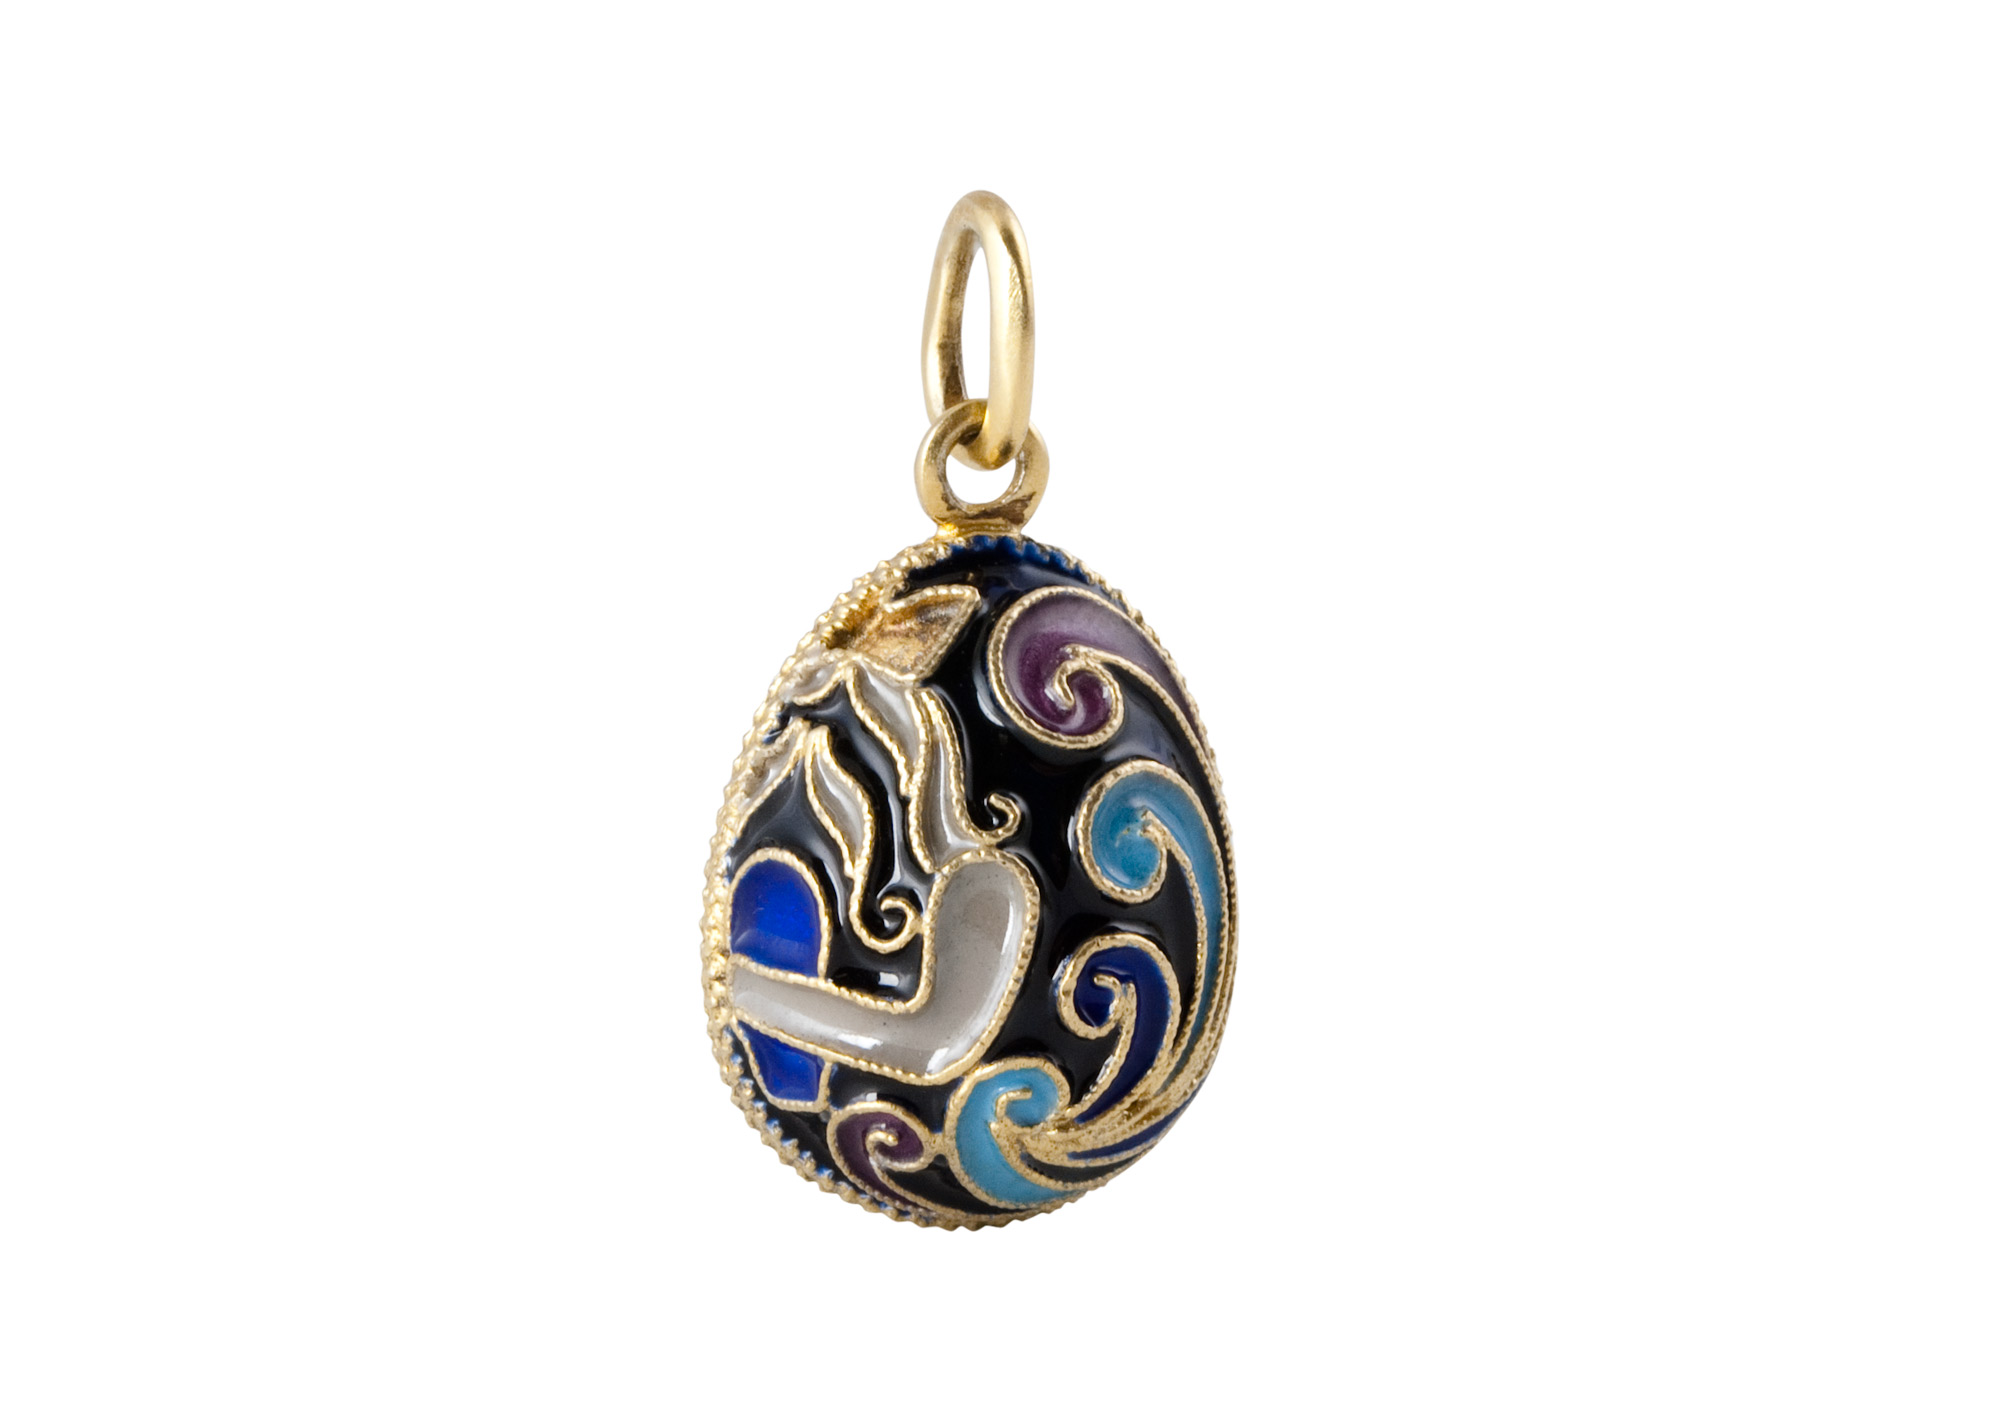 Buy Aquarius Pendant Zodiac Collection at GoldenCockerel.com